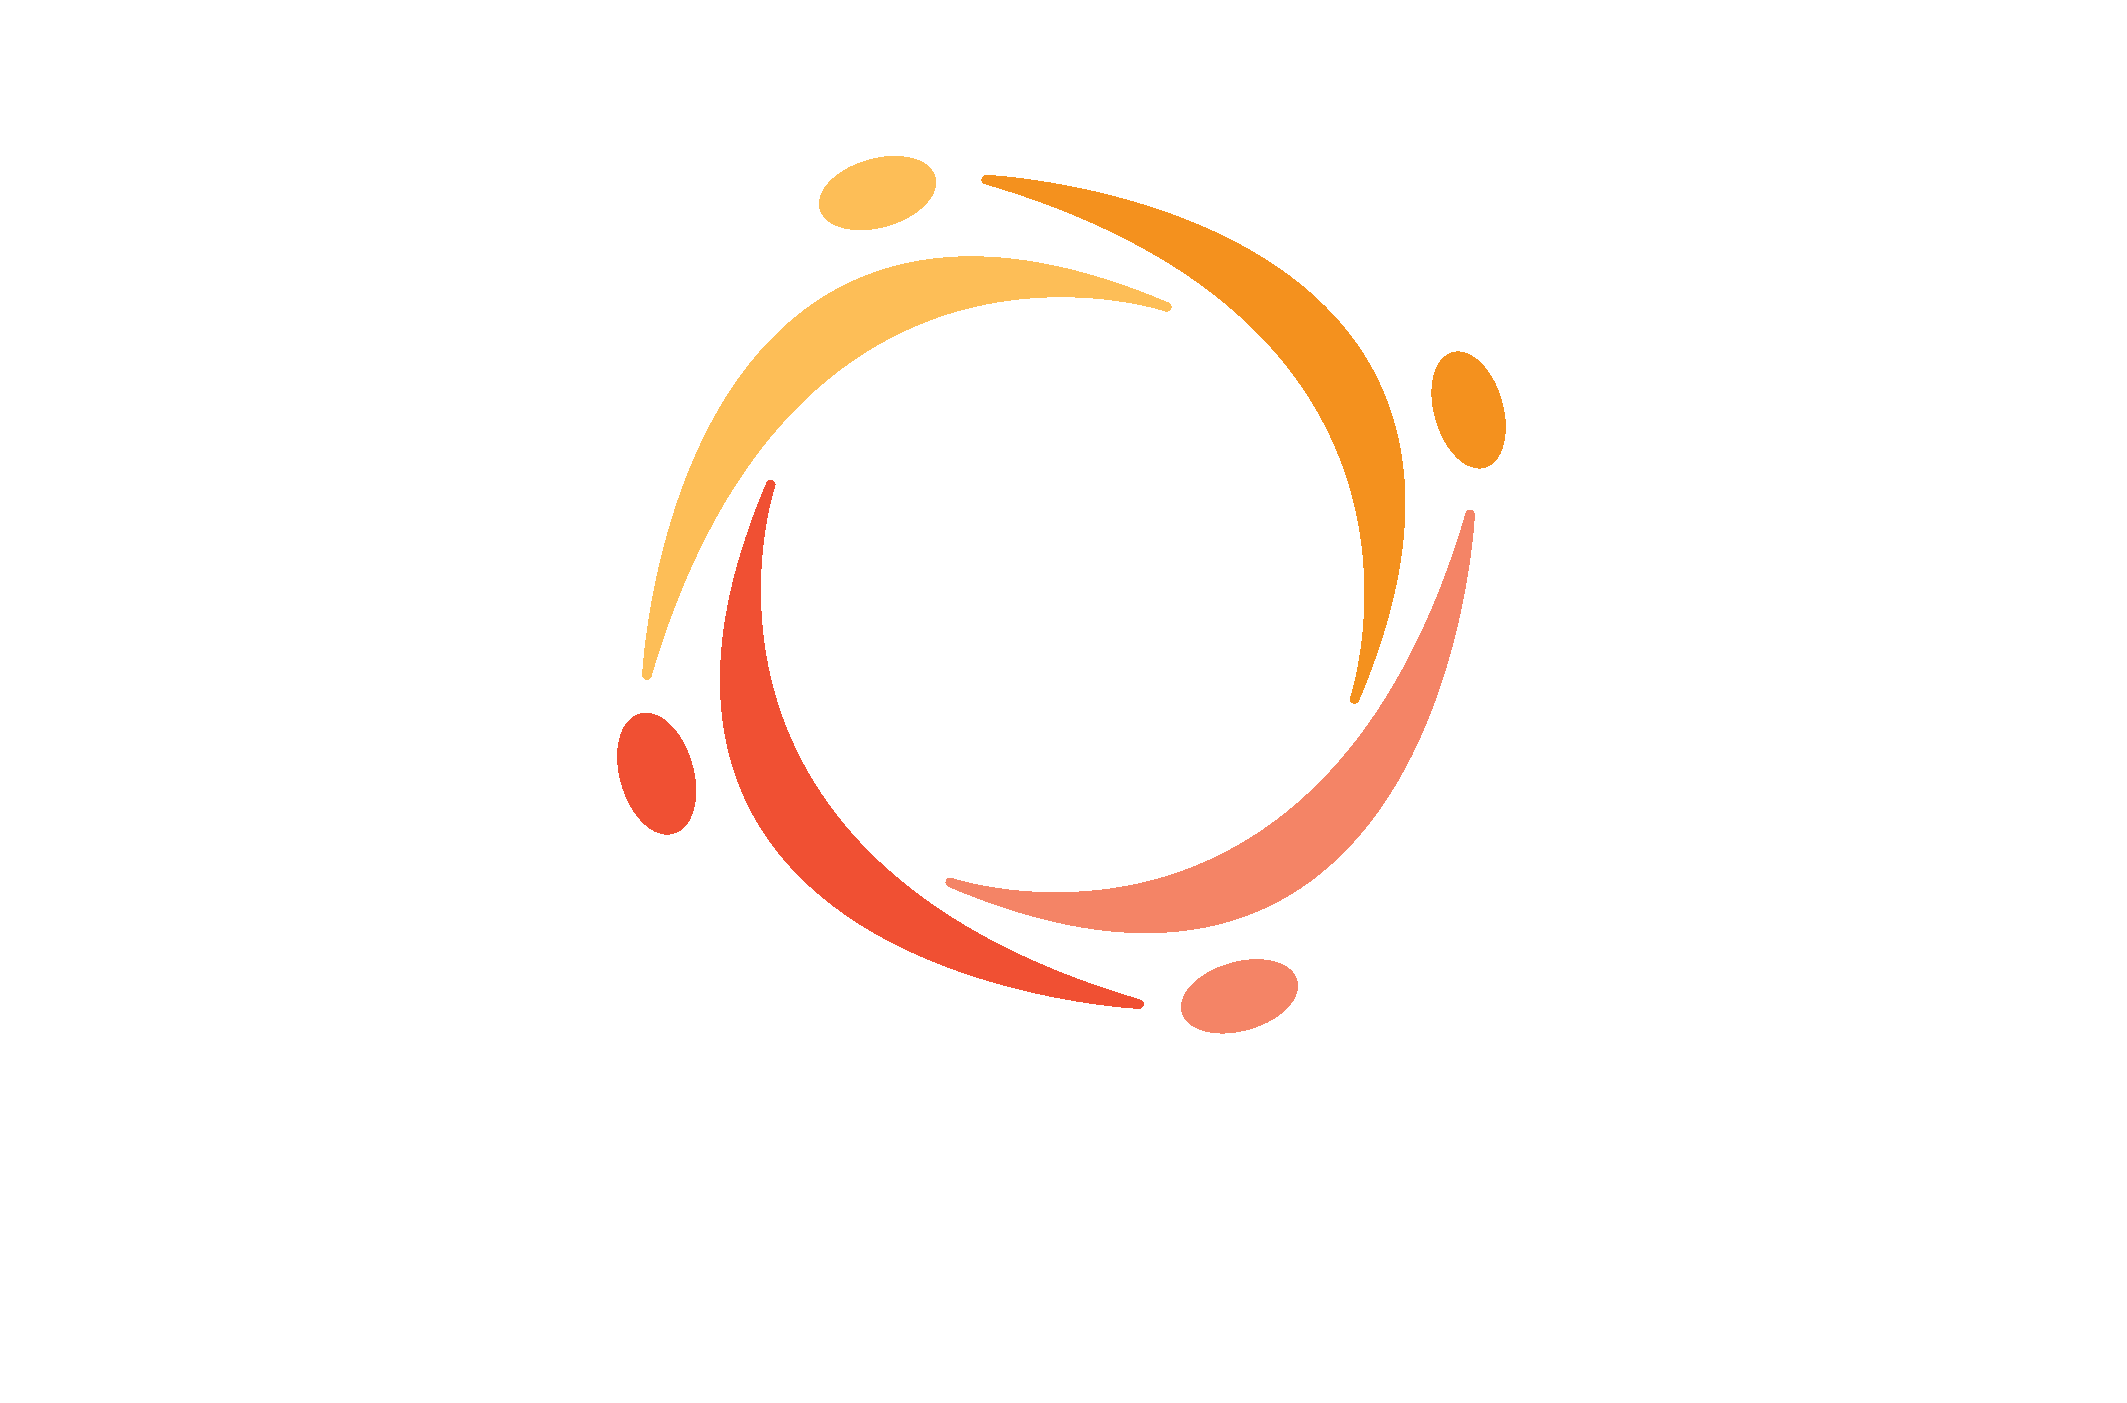 Baltimore Child Abuse Center  – 2020 Recipient